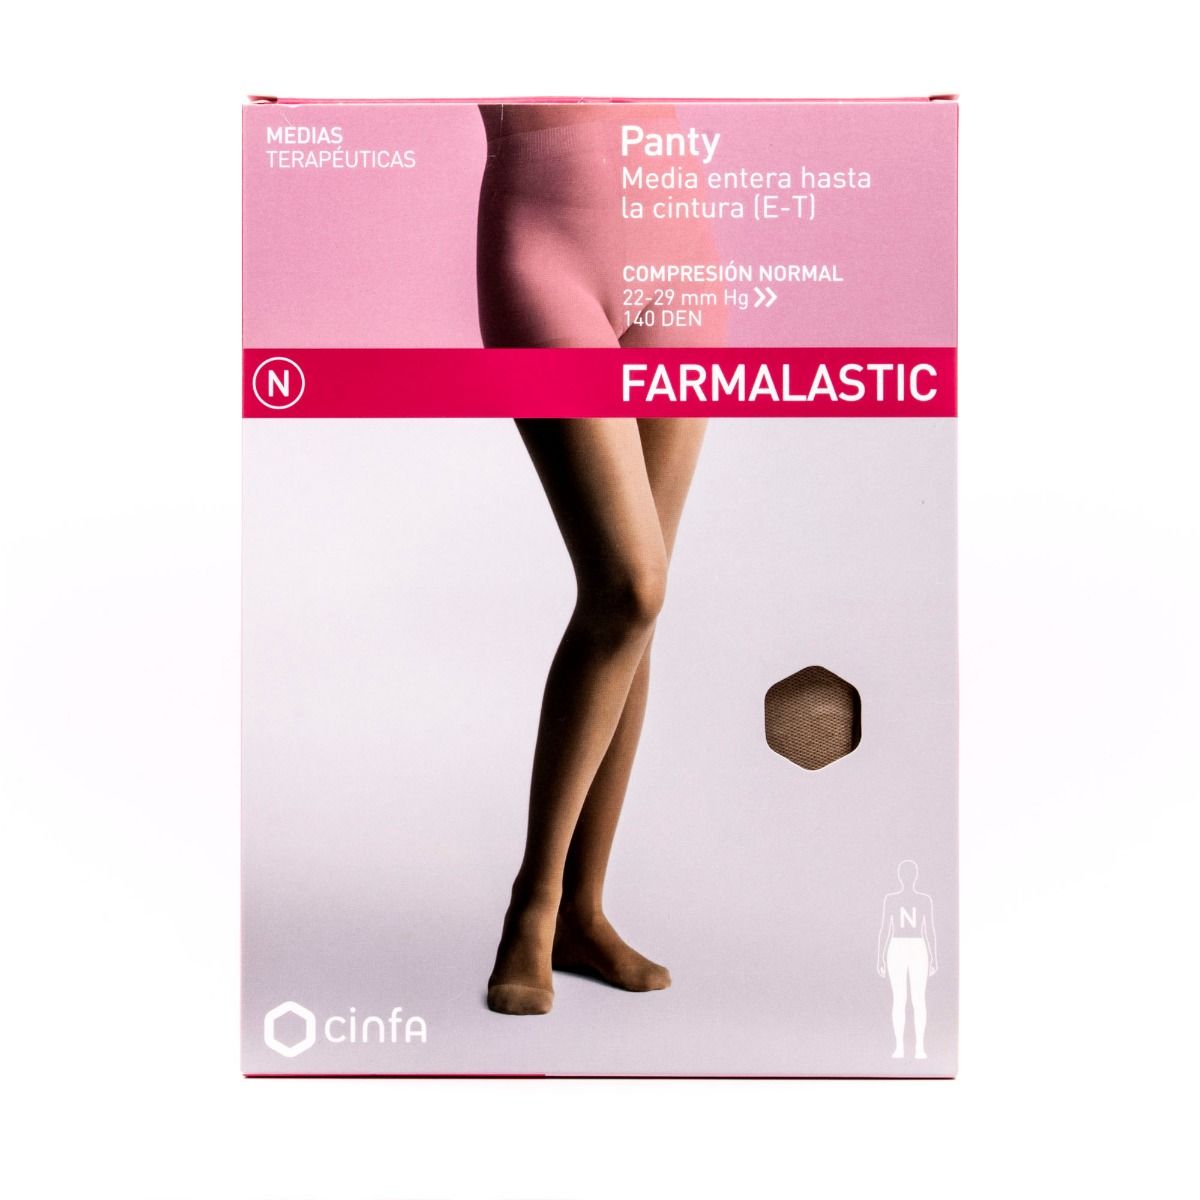 Farmalastic Panty Media Compresión Normal 140 DEN Beige Talla G